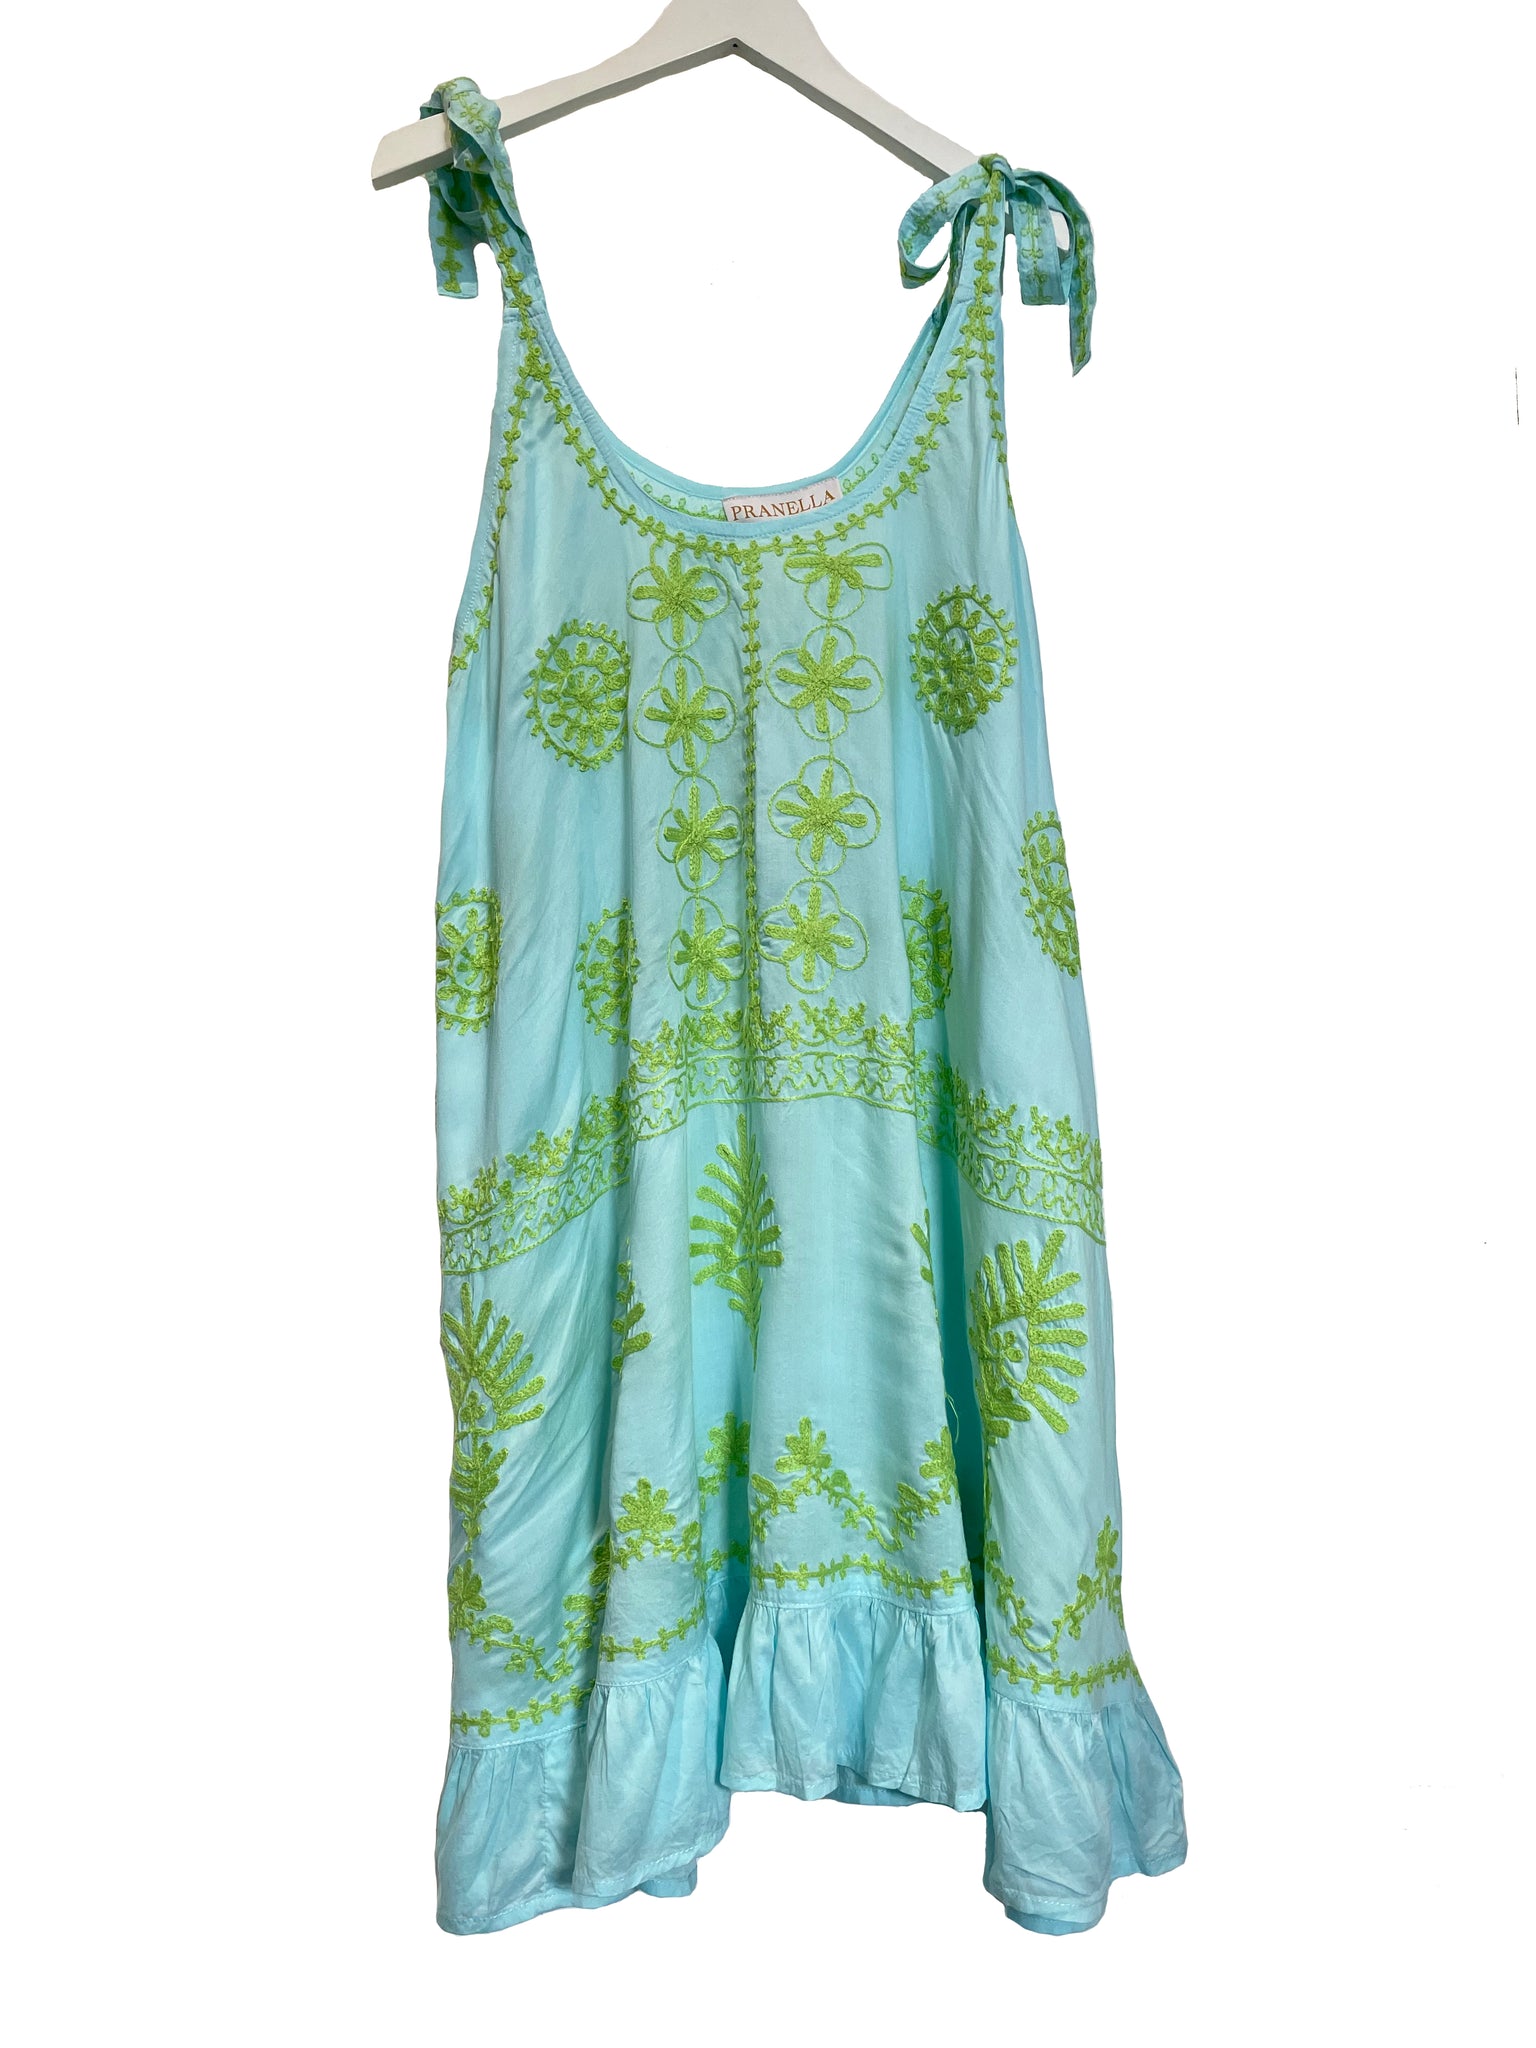 Pranella Remi Slip Dress in Aqua